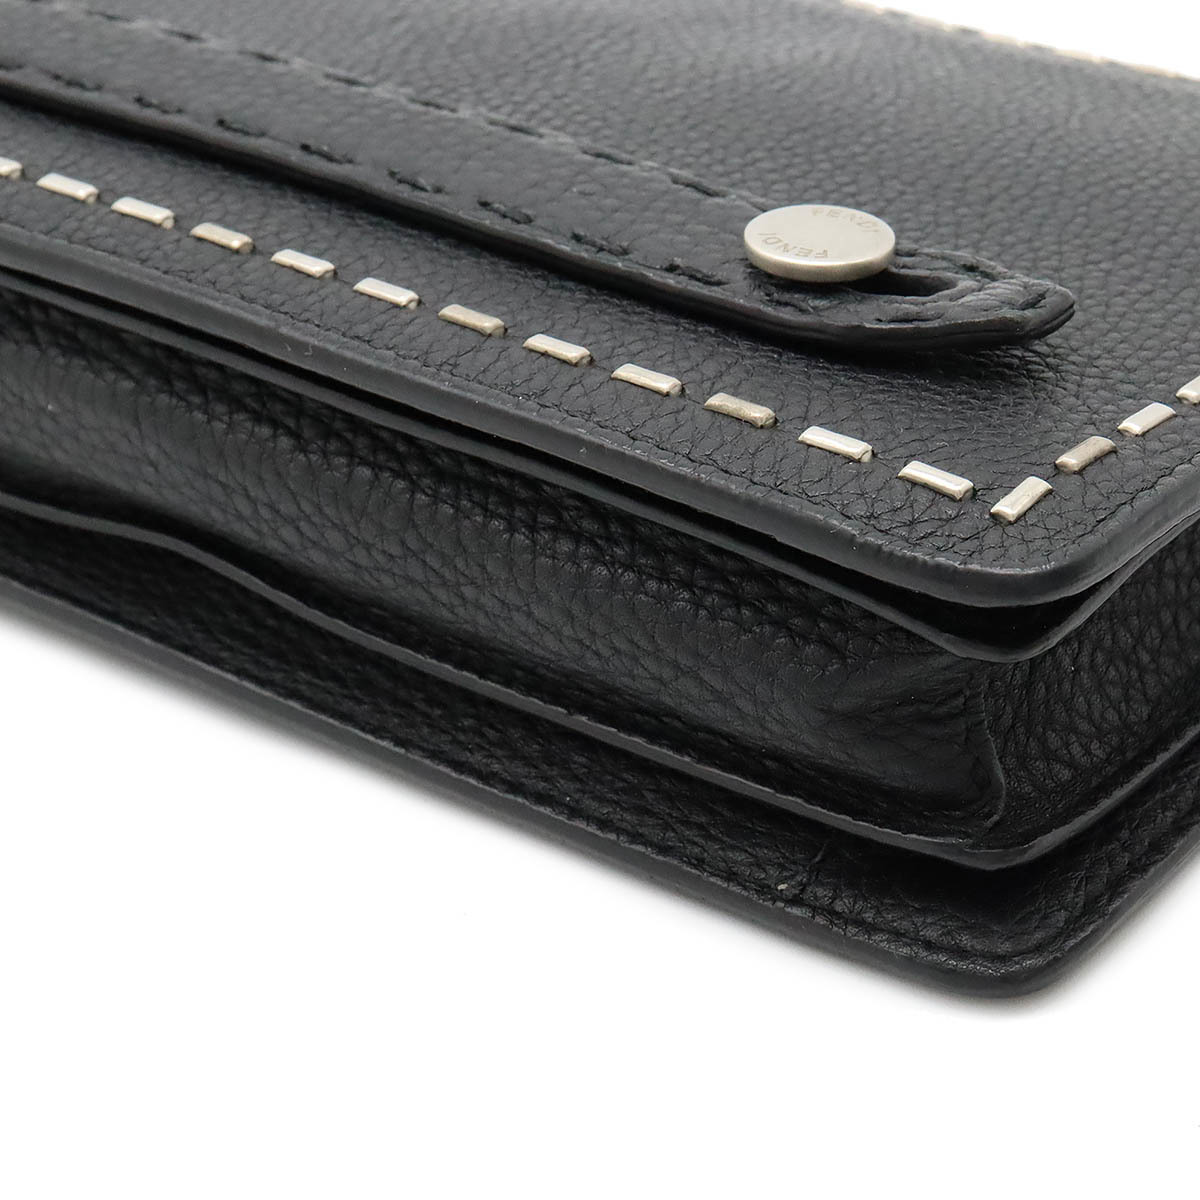 FENDI Fendi selection rear clutch bag second bag handbag leather black black silver metal fittings 